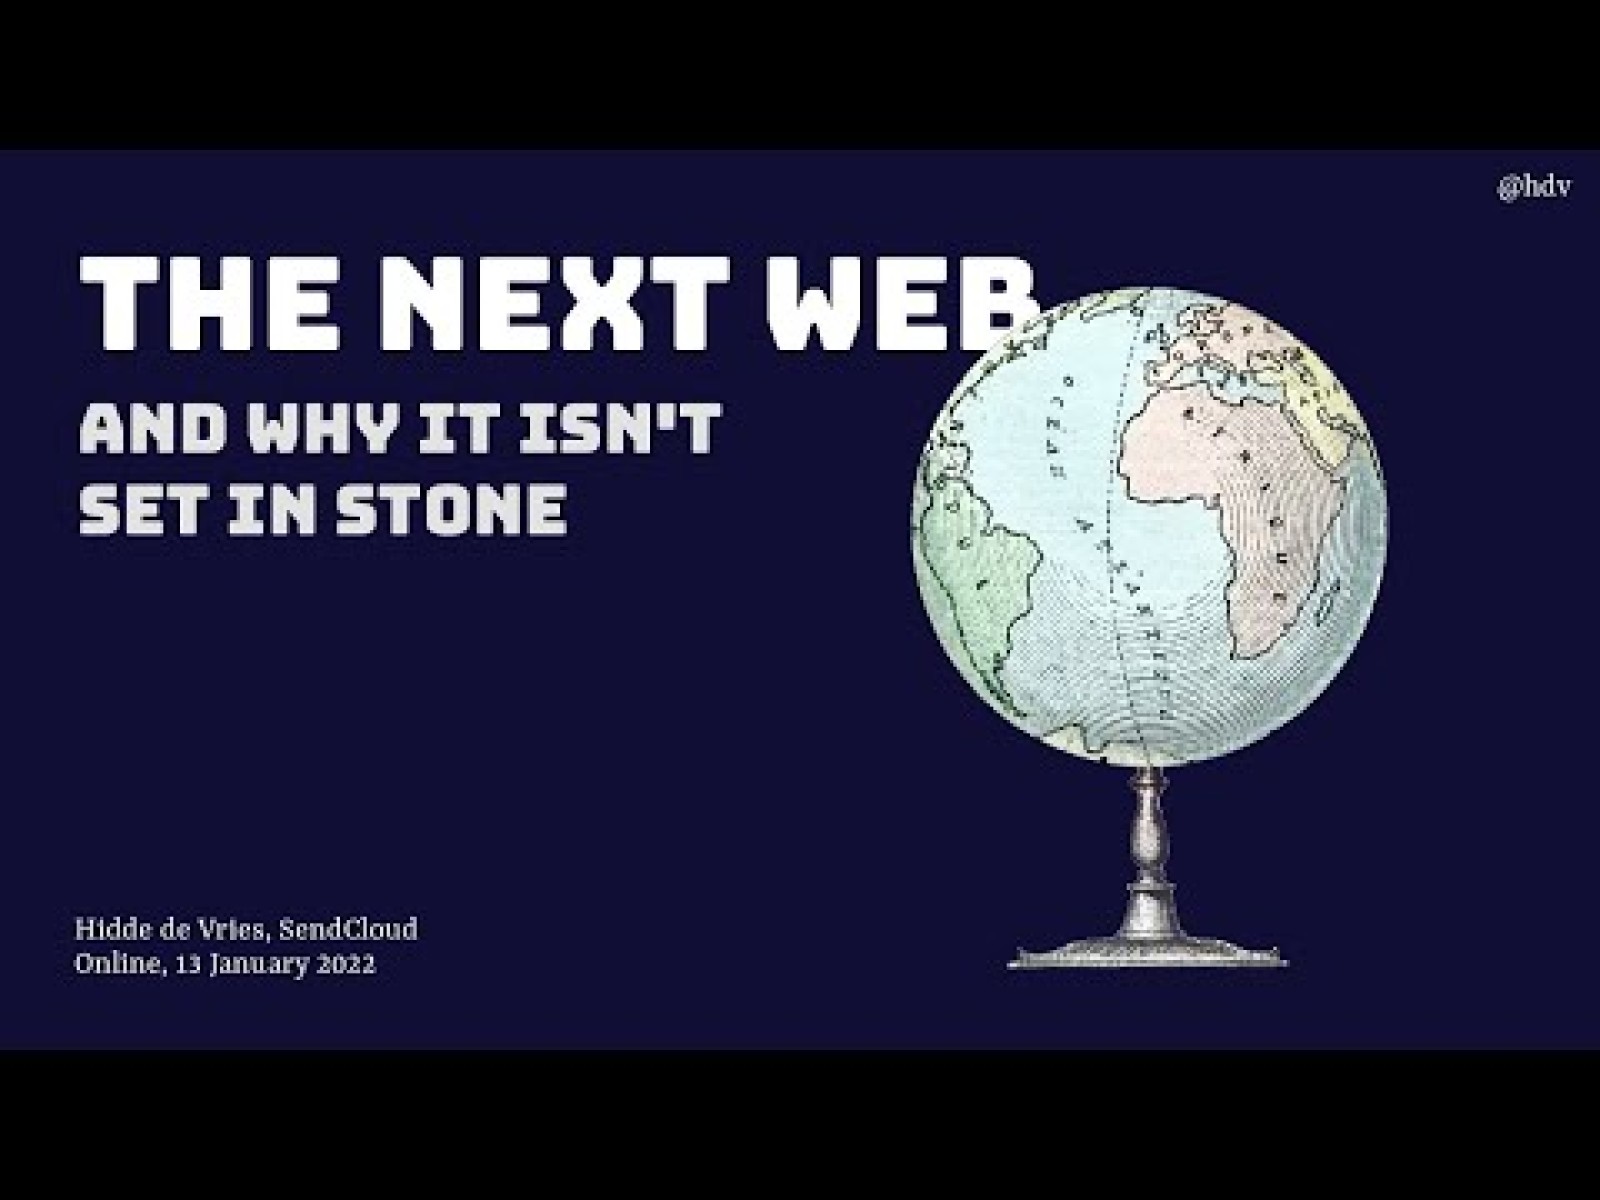 The next web